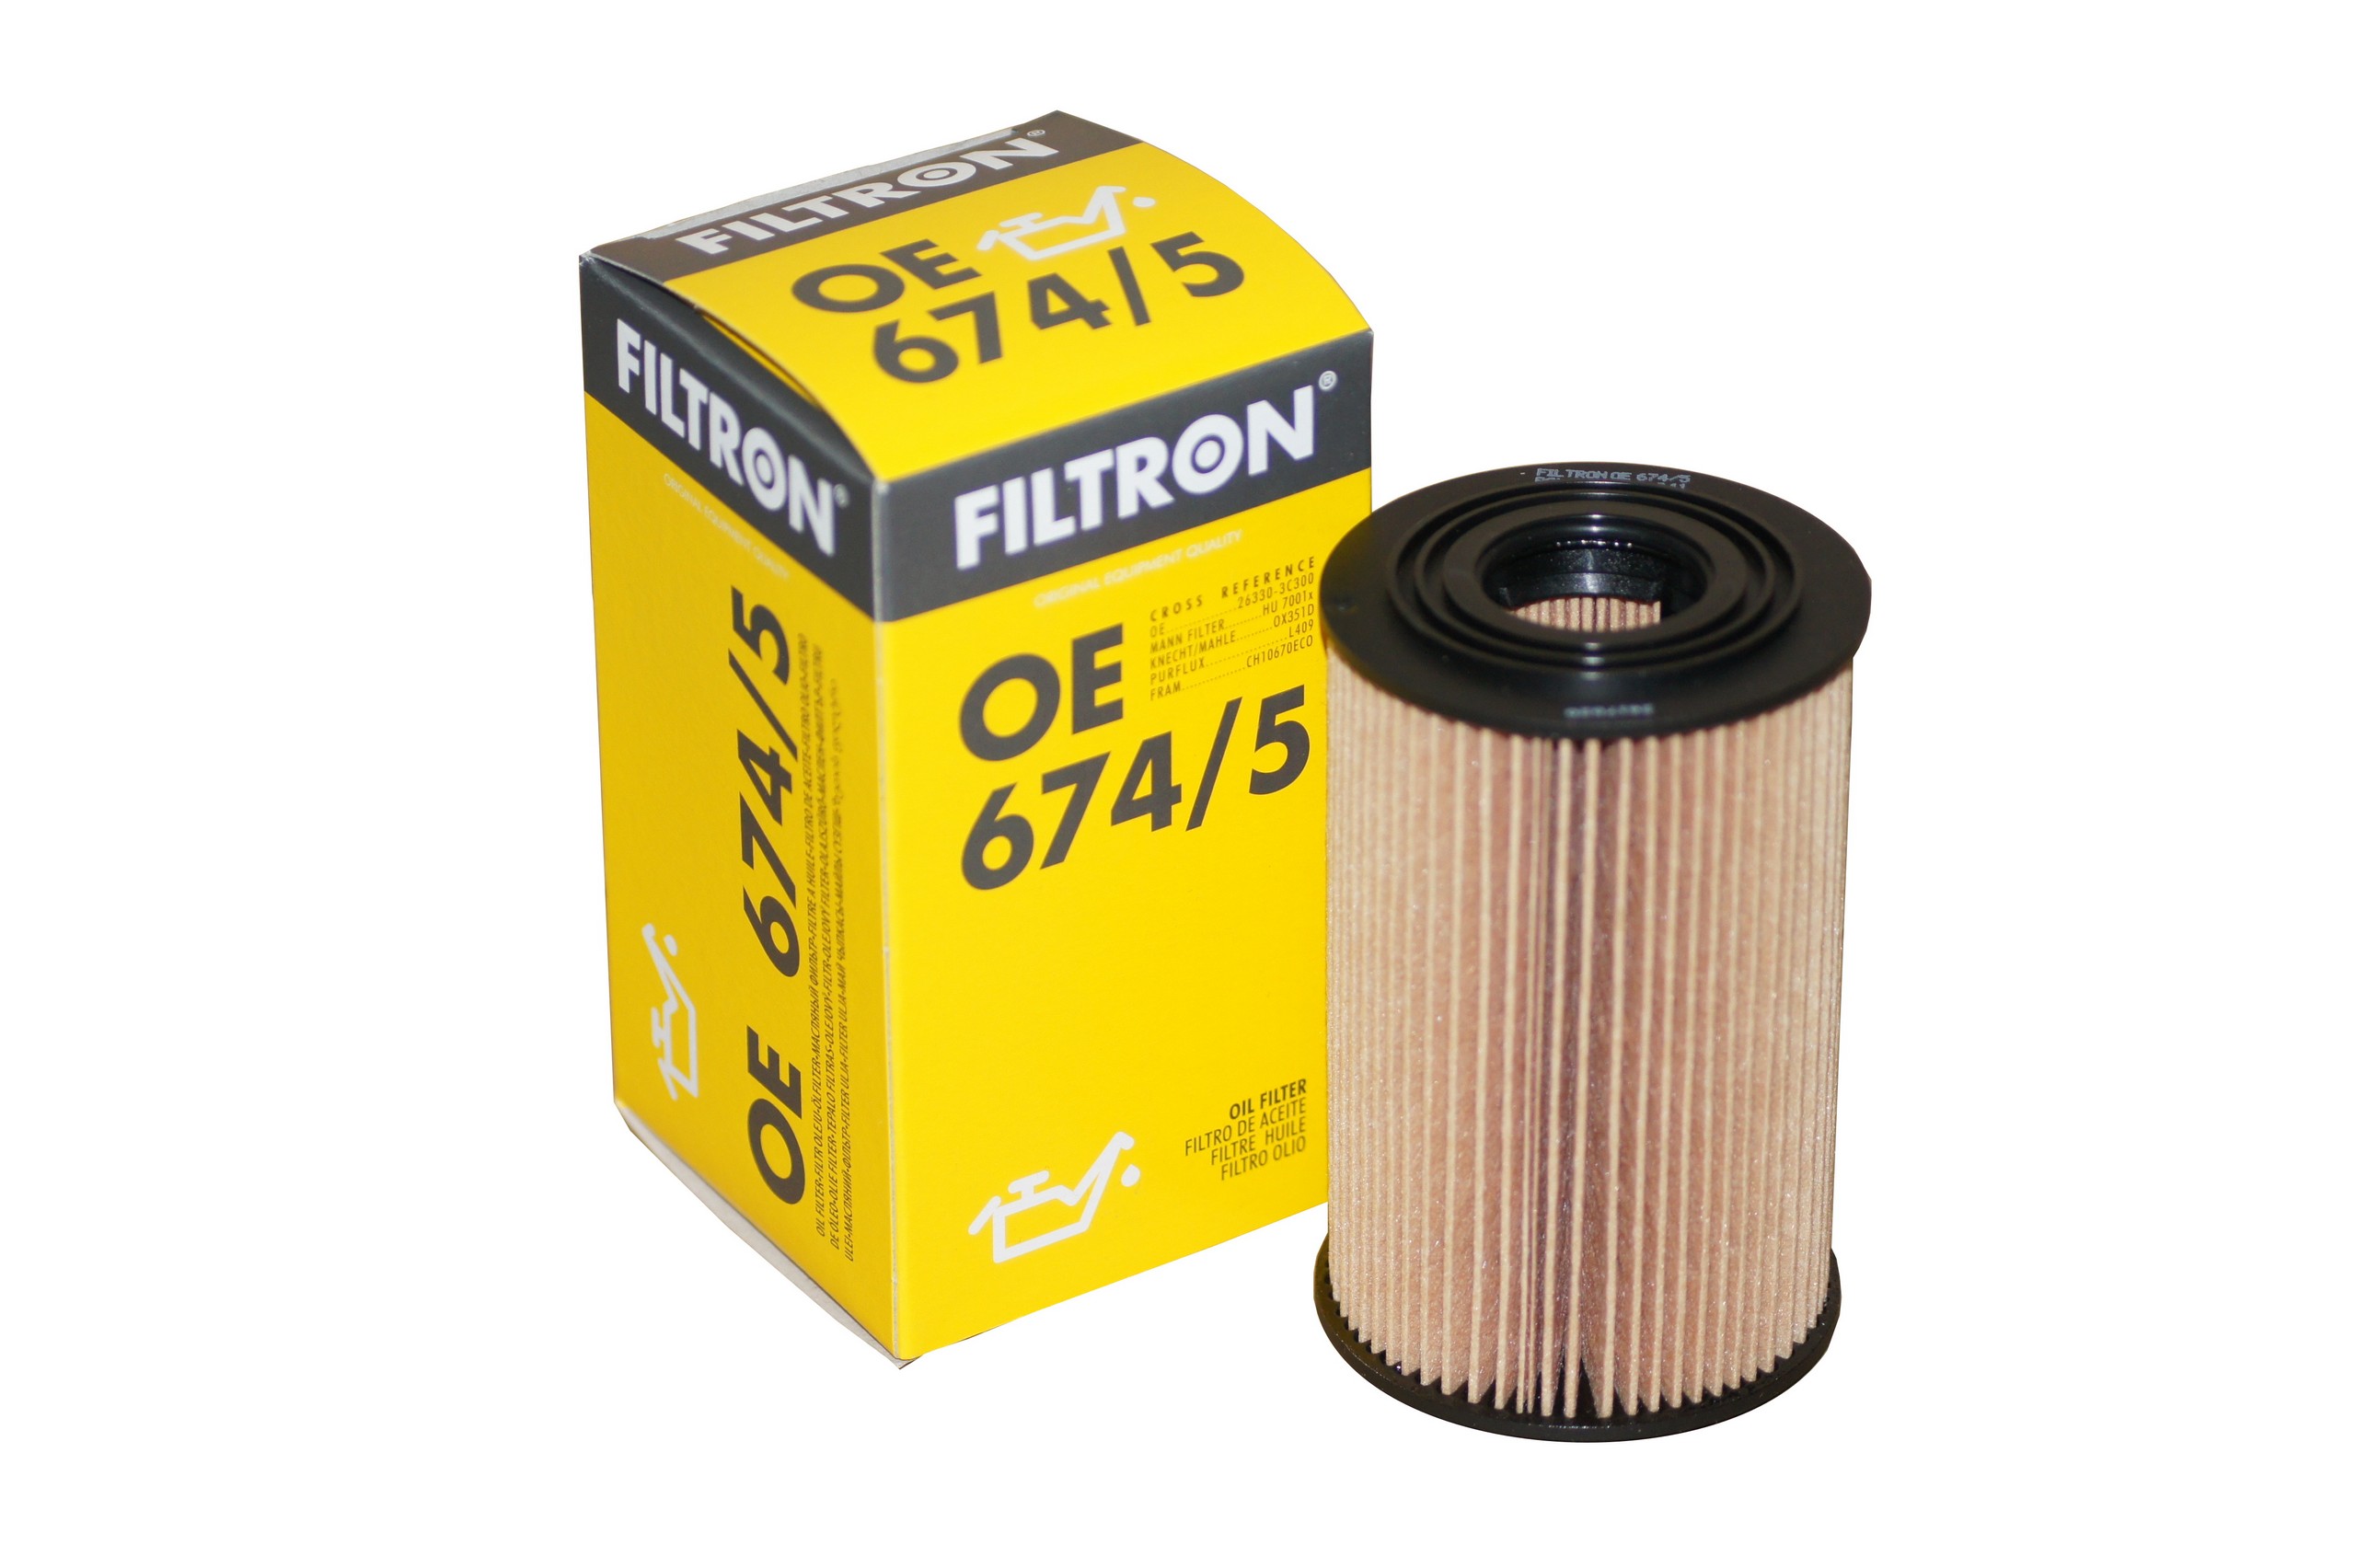 FILTRON filtr oleju OE674/5 Kia Ceed Hyundai CRDi